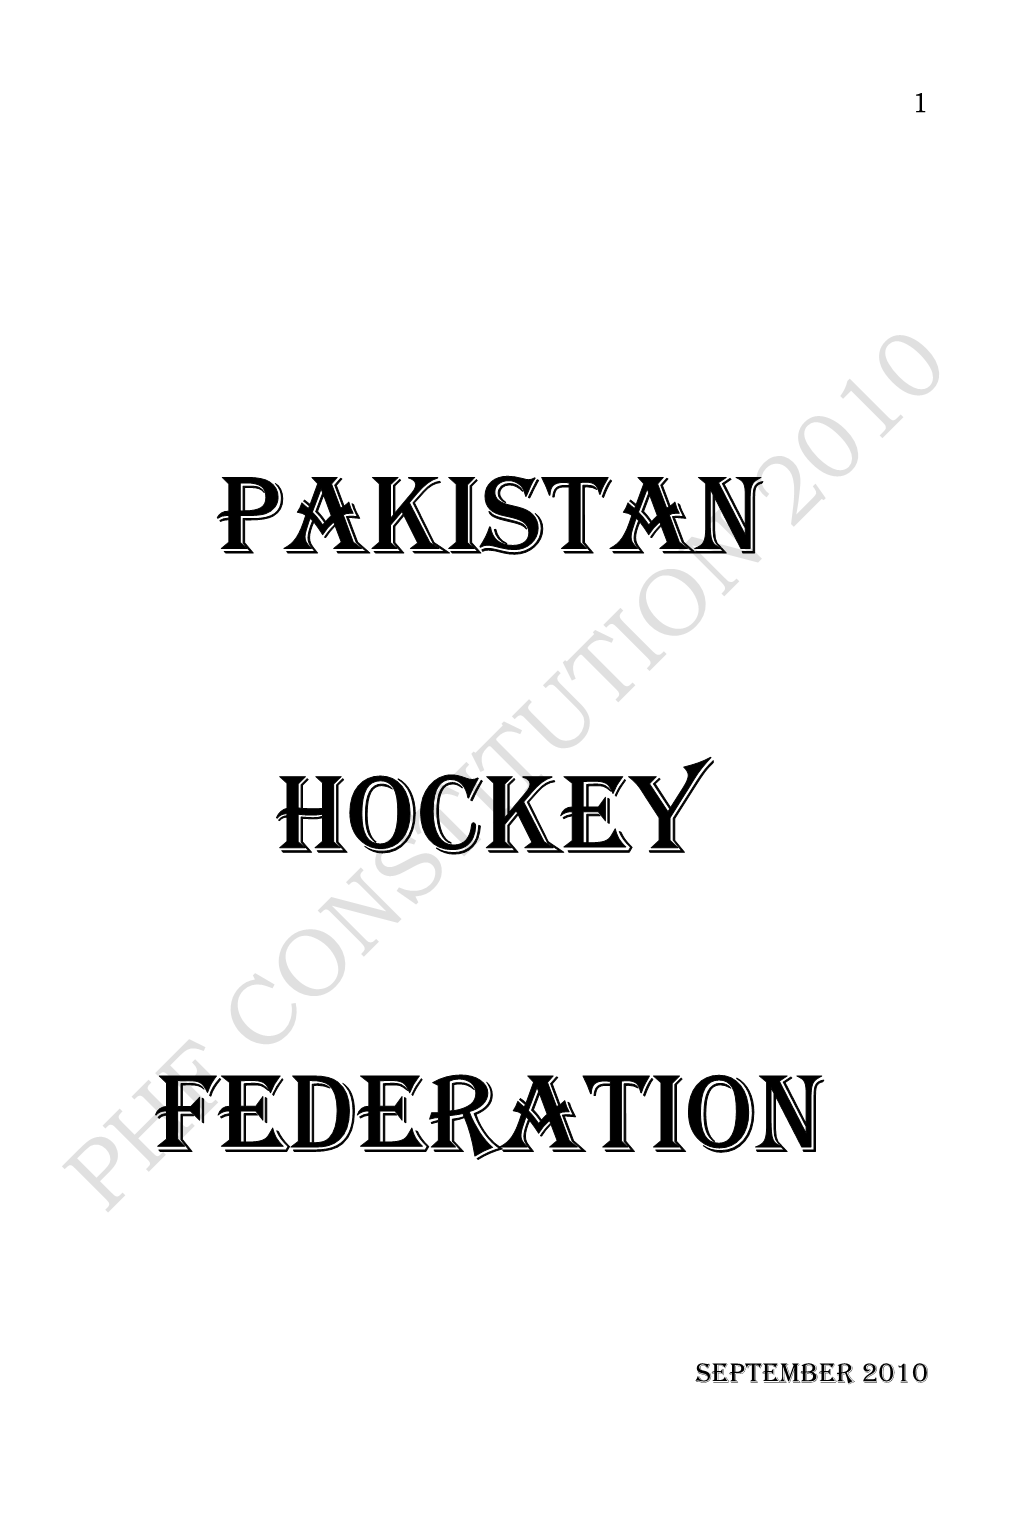 Pakistan Hockey Federation